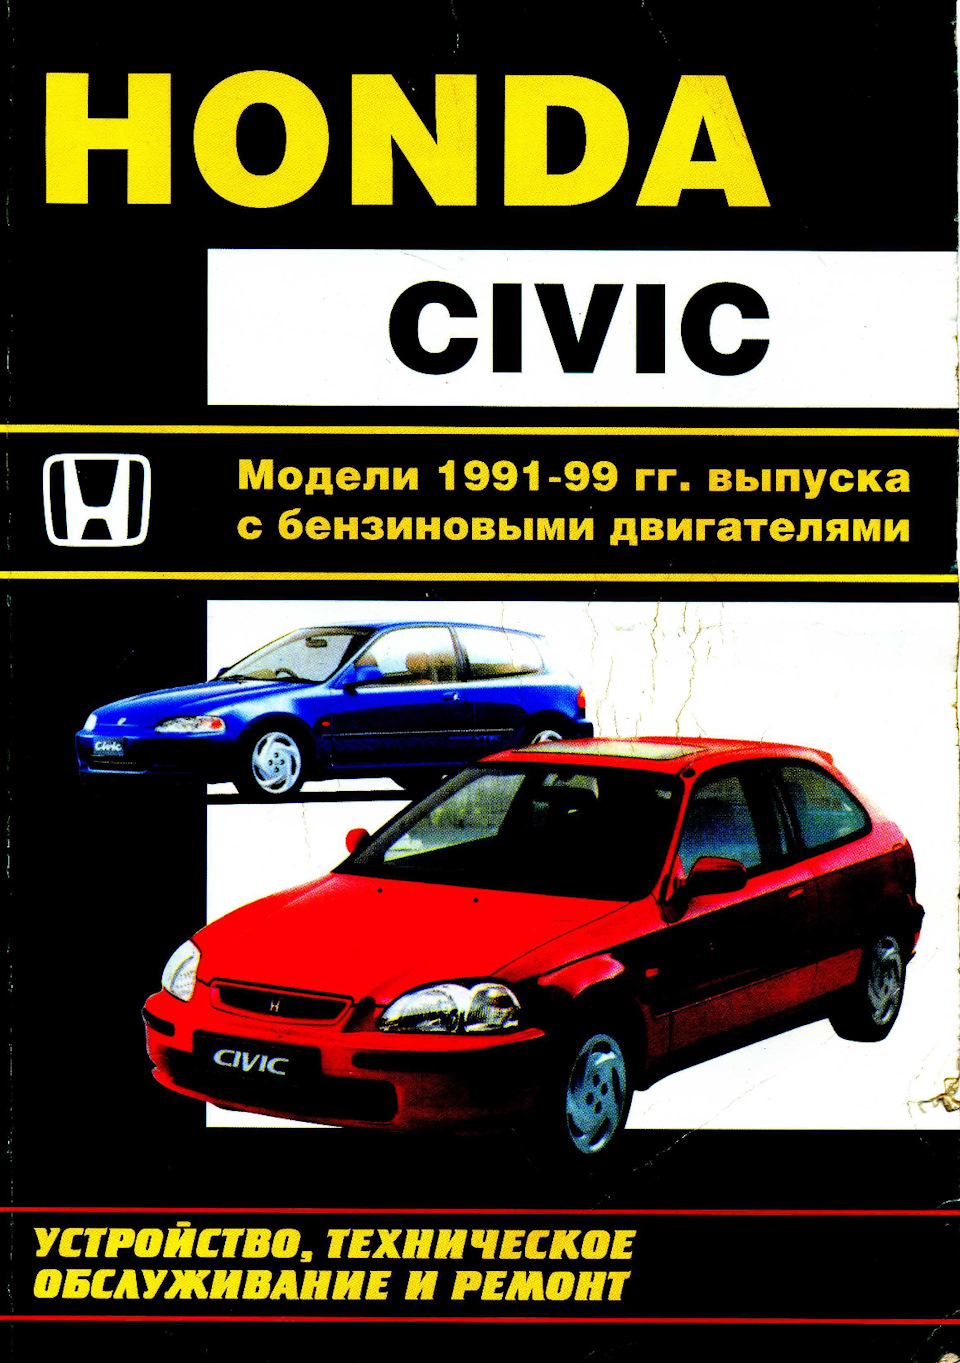 Книга по ремонту хонда. Хонда Цивик 1991-1999. Honda Civic 1991-1999. Honda Civic 1991-1999 книга по ремонту. Хонда Цивик книга.